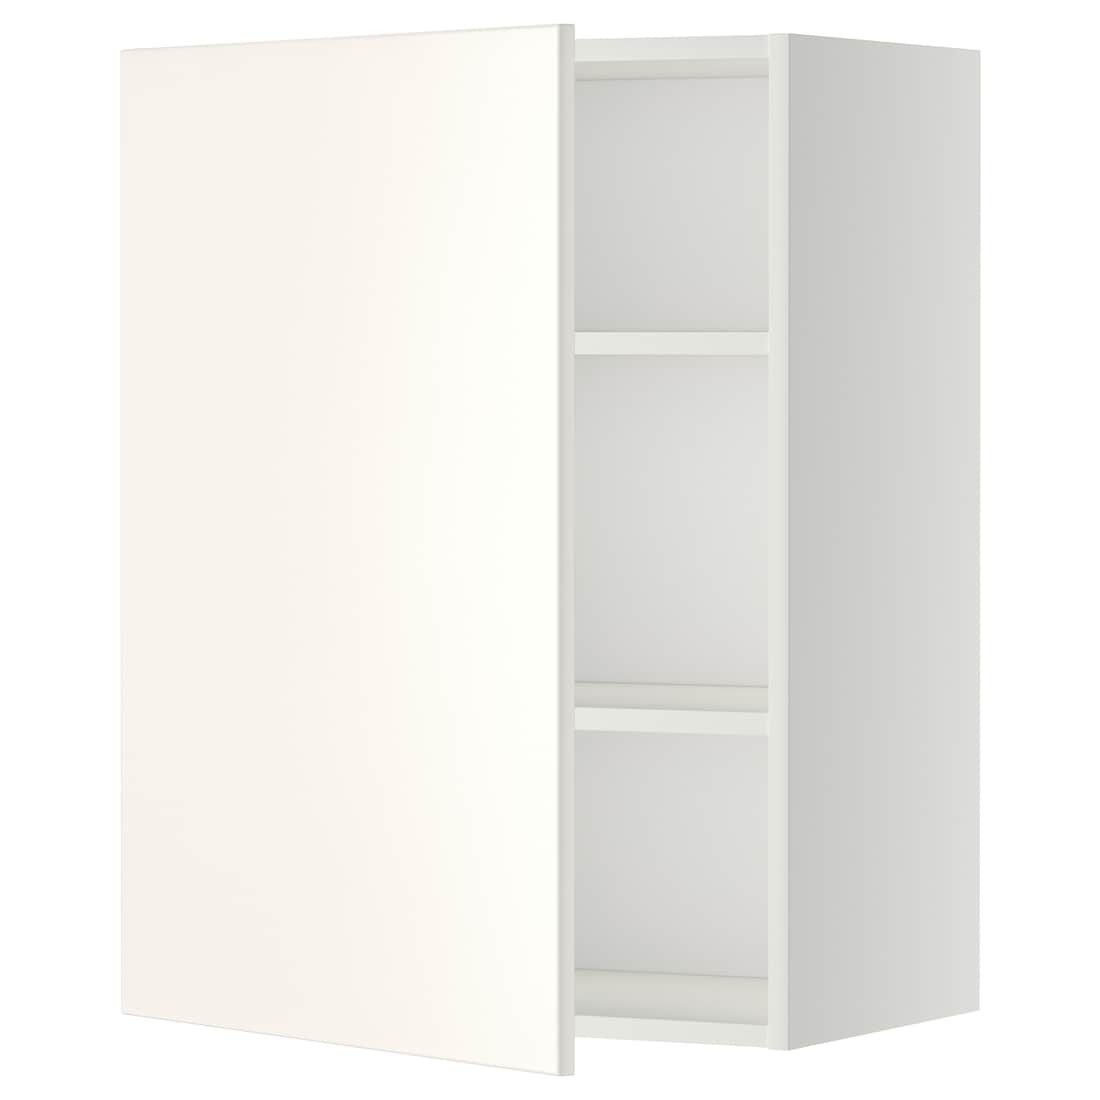 IKEA METOD МЕТОД Шкаф навесной с полками, белый / Veddinge белый, 60x80 см 69457978 694.579.78